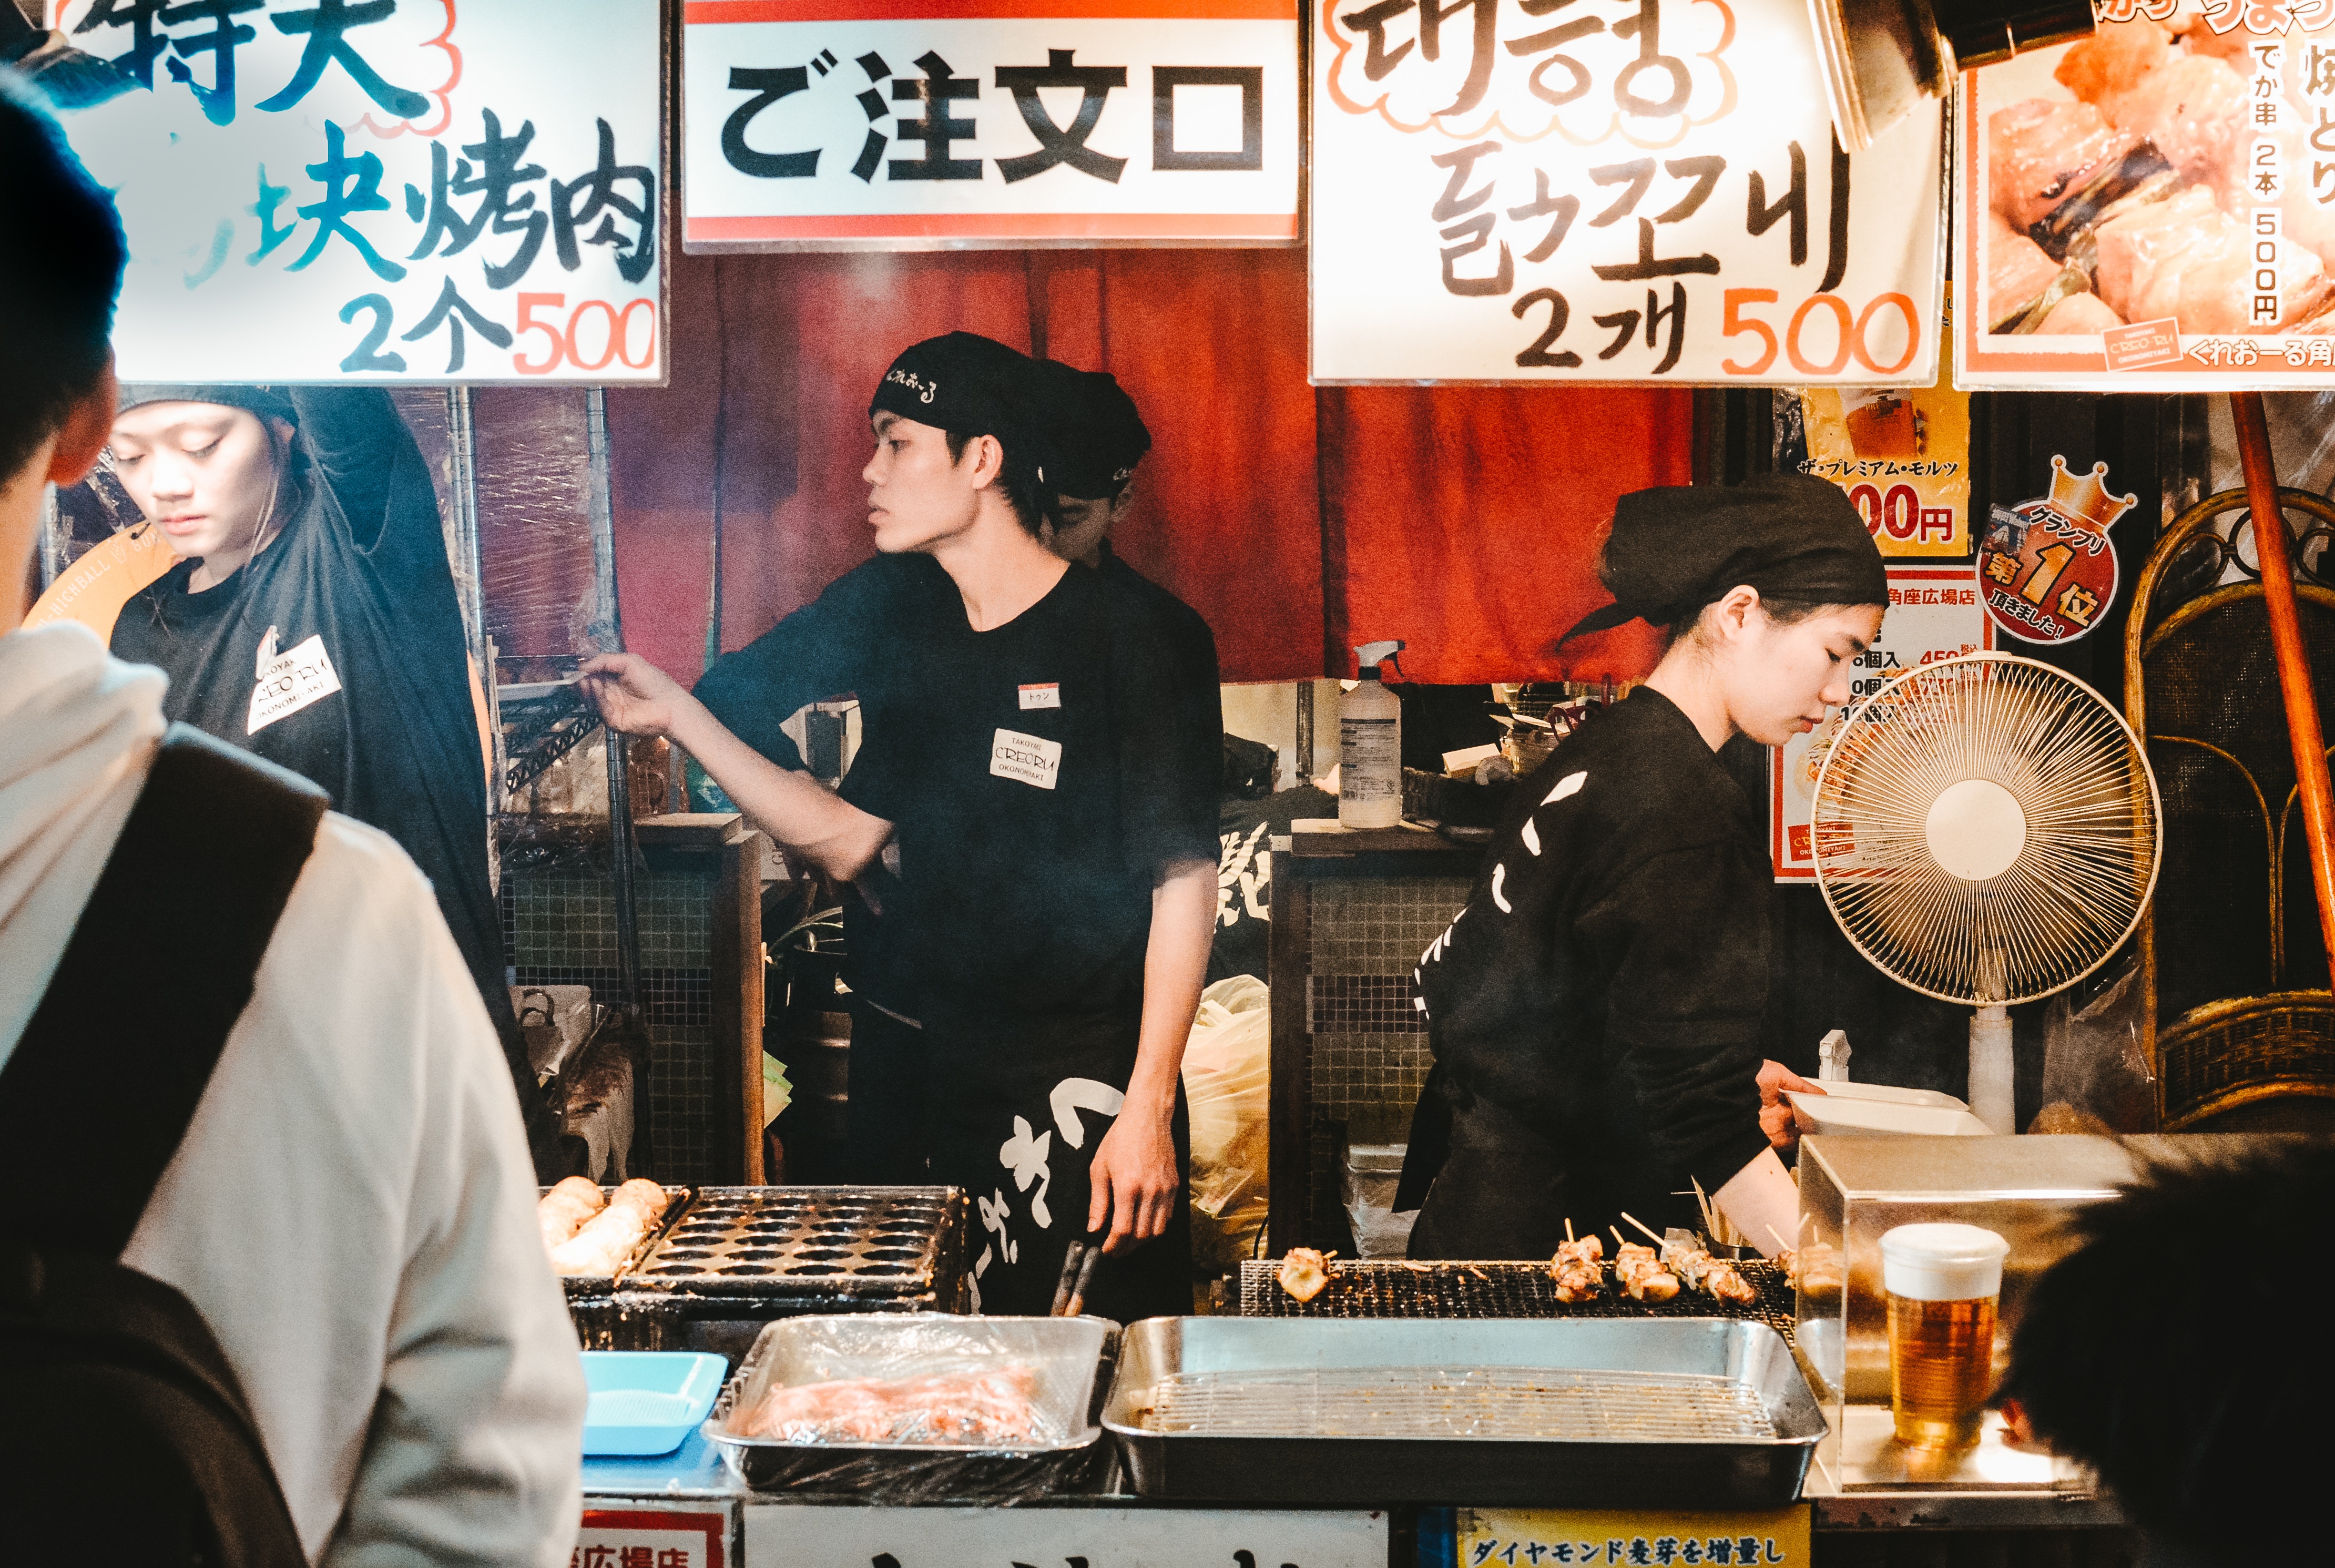 Kyoto, Japan Restaurants: Best Local Cuisine